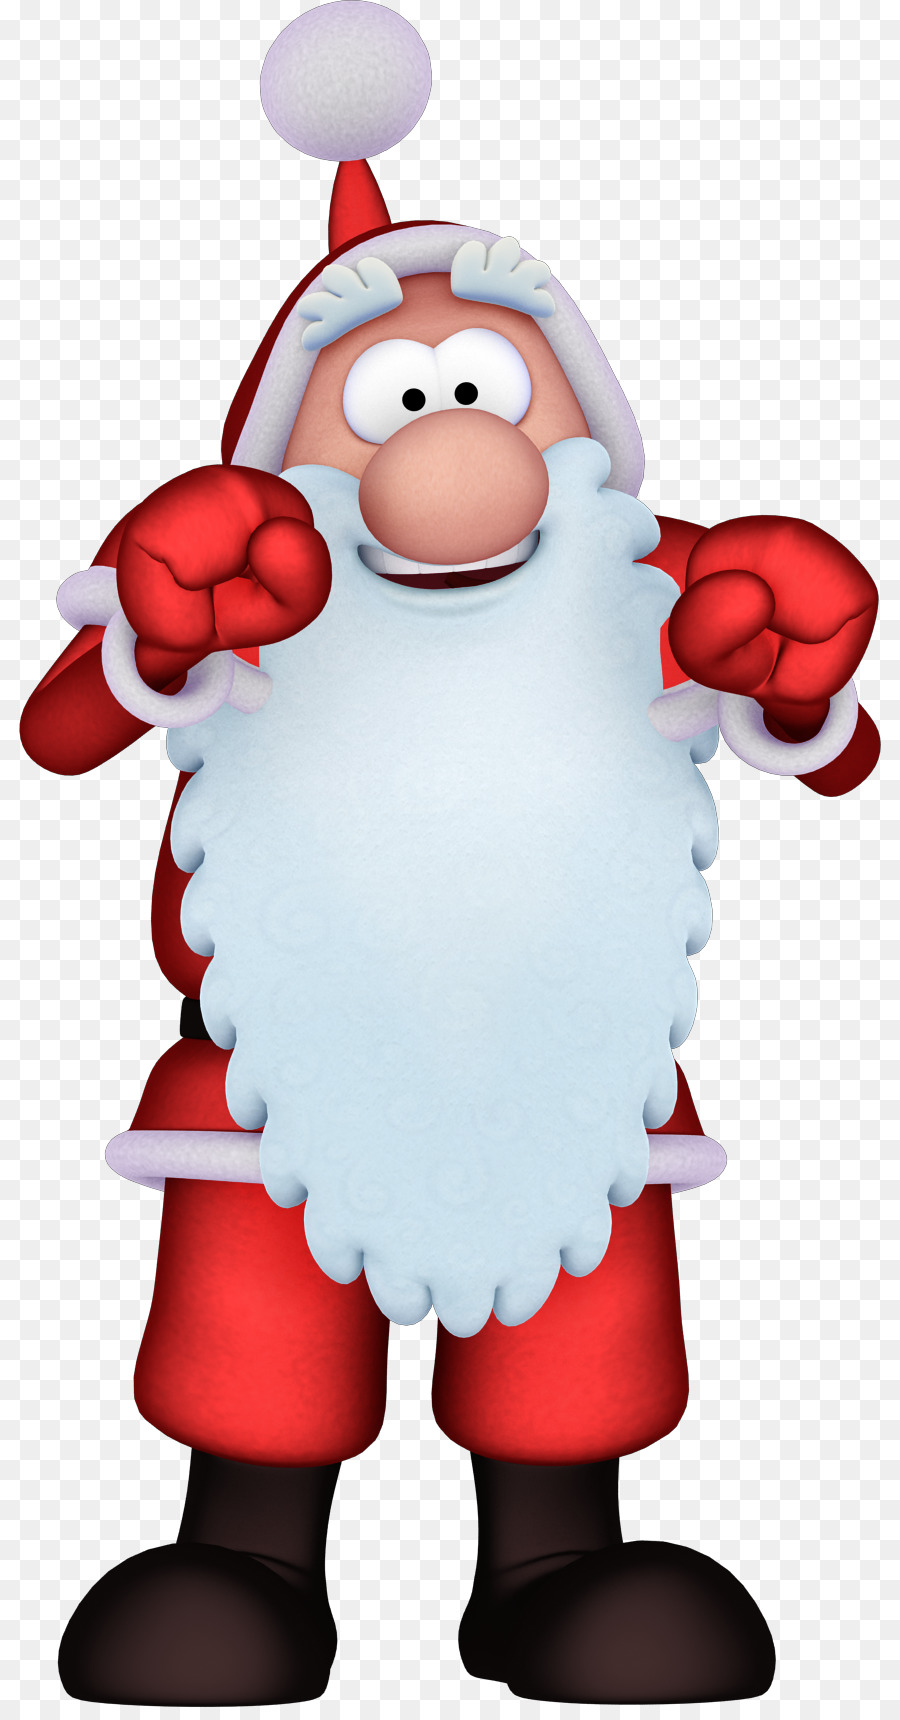 Santa Claus trang trí Giáng sinh Clip nghệ thuật - santa claus